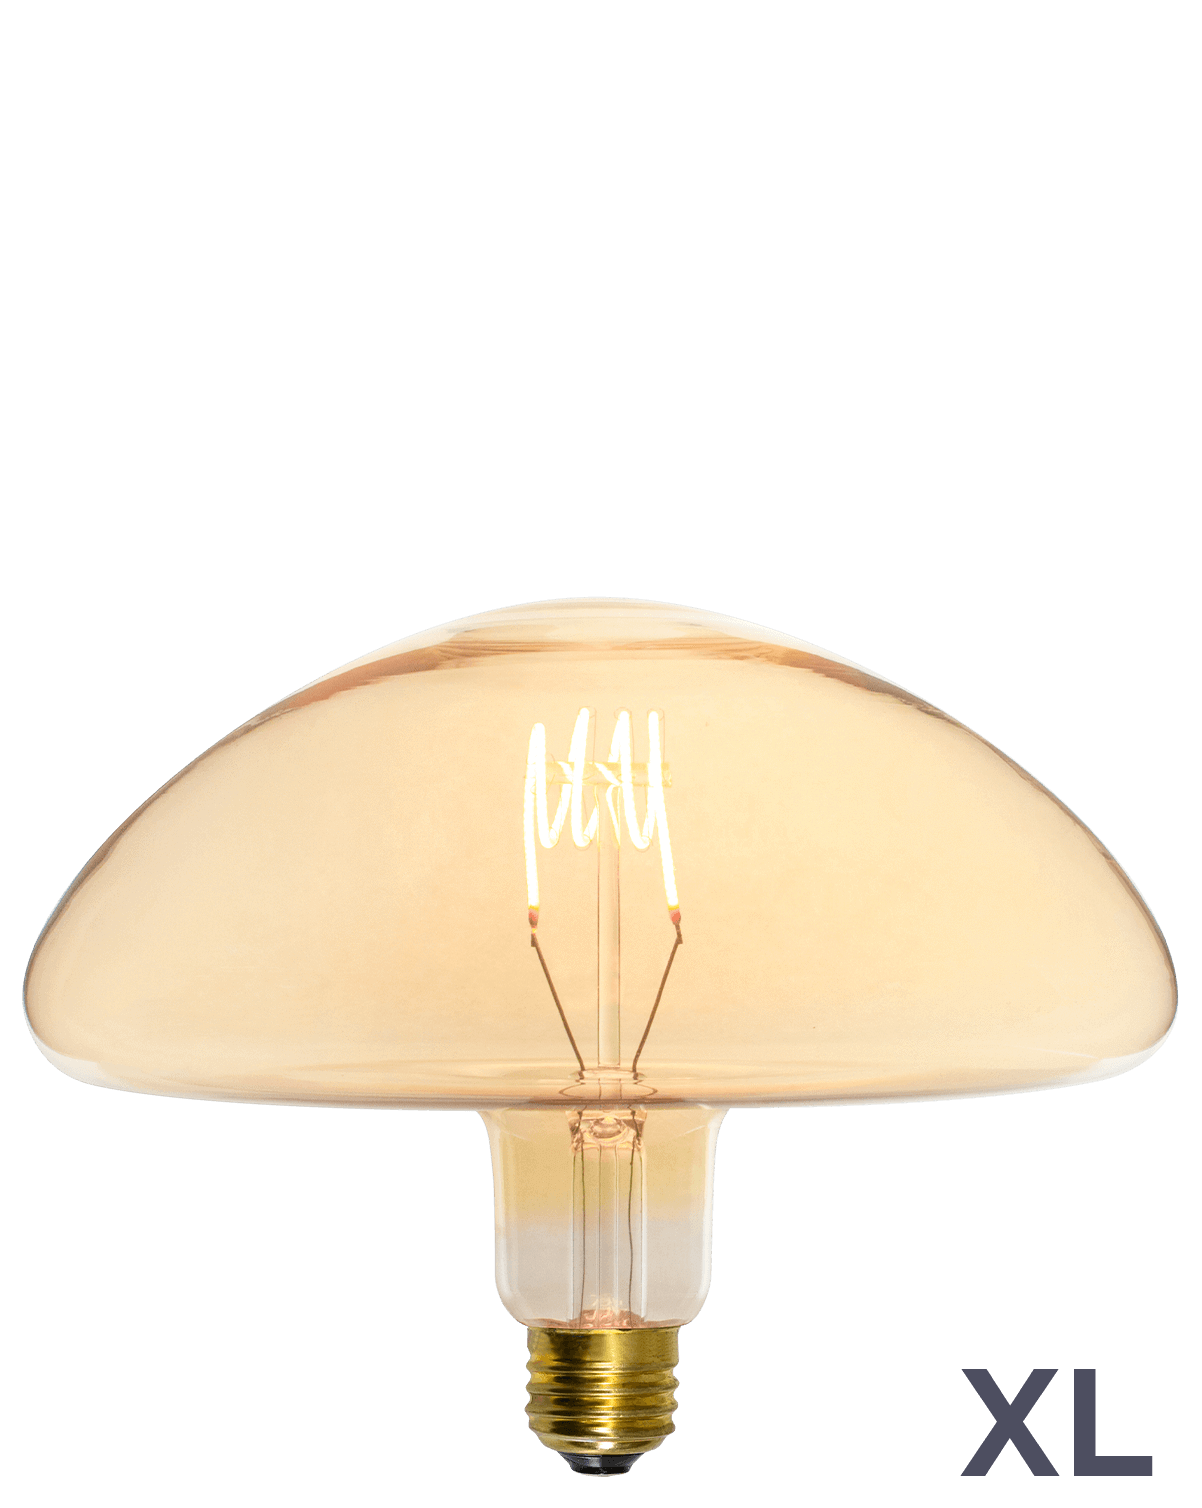 Bulb: LED XL Amber Mushroom Hangout Lighting 